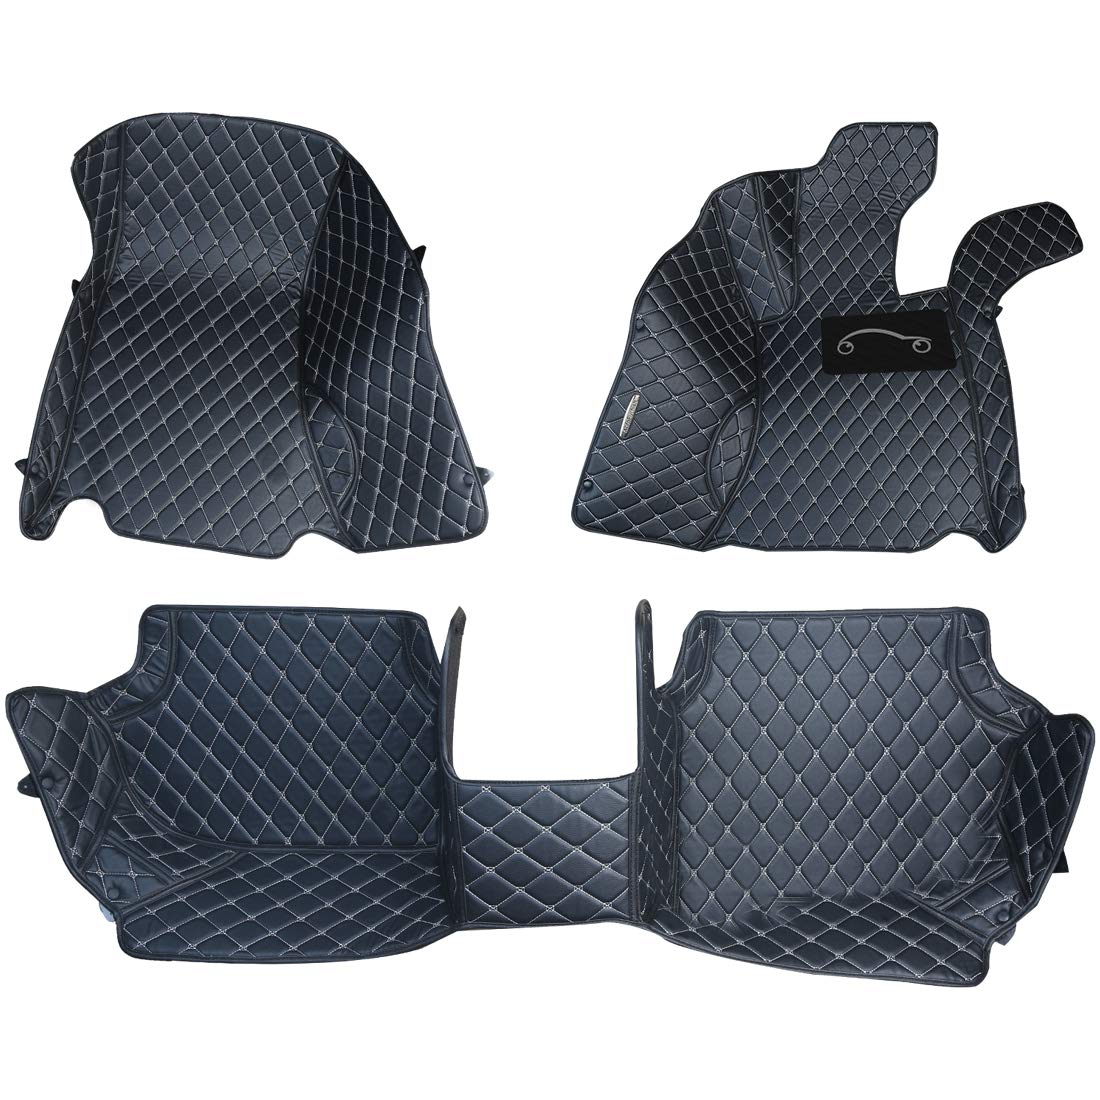 Mahindra Scorpio (Captain Seats) 5D Premium Car Floor Mat, All Weather Proof, Elegant & Stylish, 100% Waterproof & Odorless, Heavy Duty (12mm Faux Leather, 2 Rows)